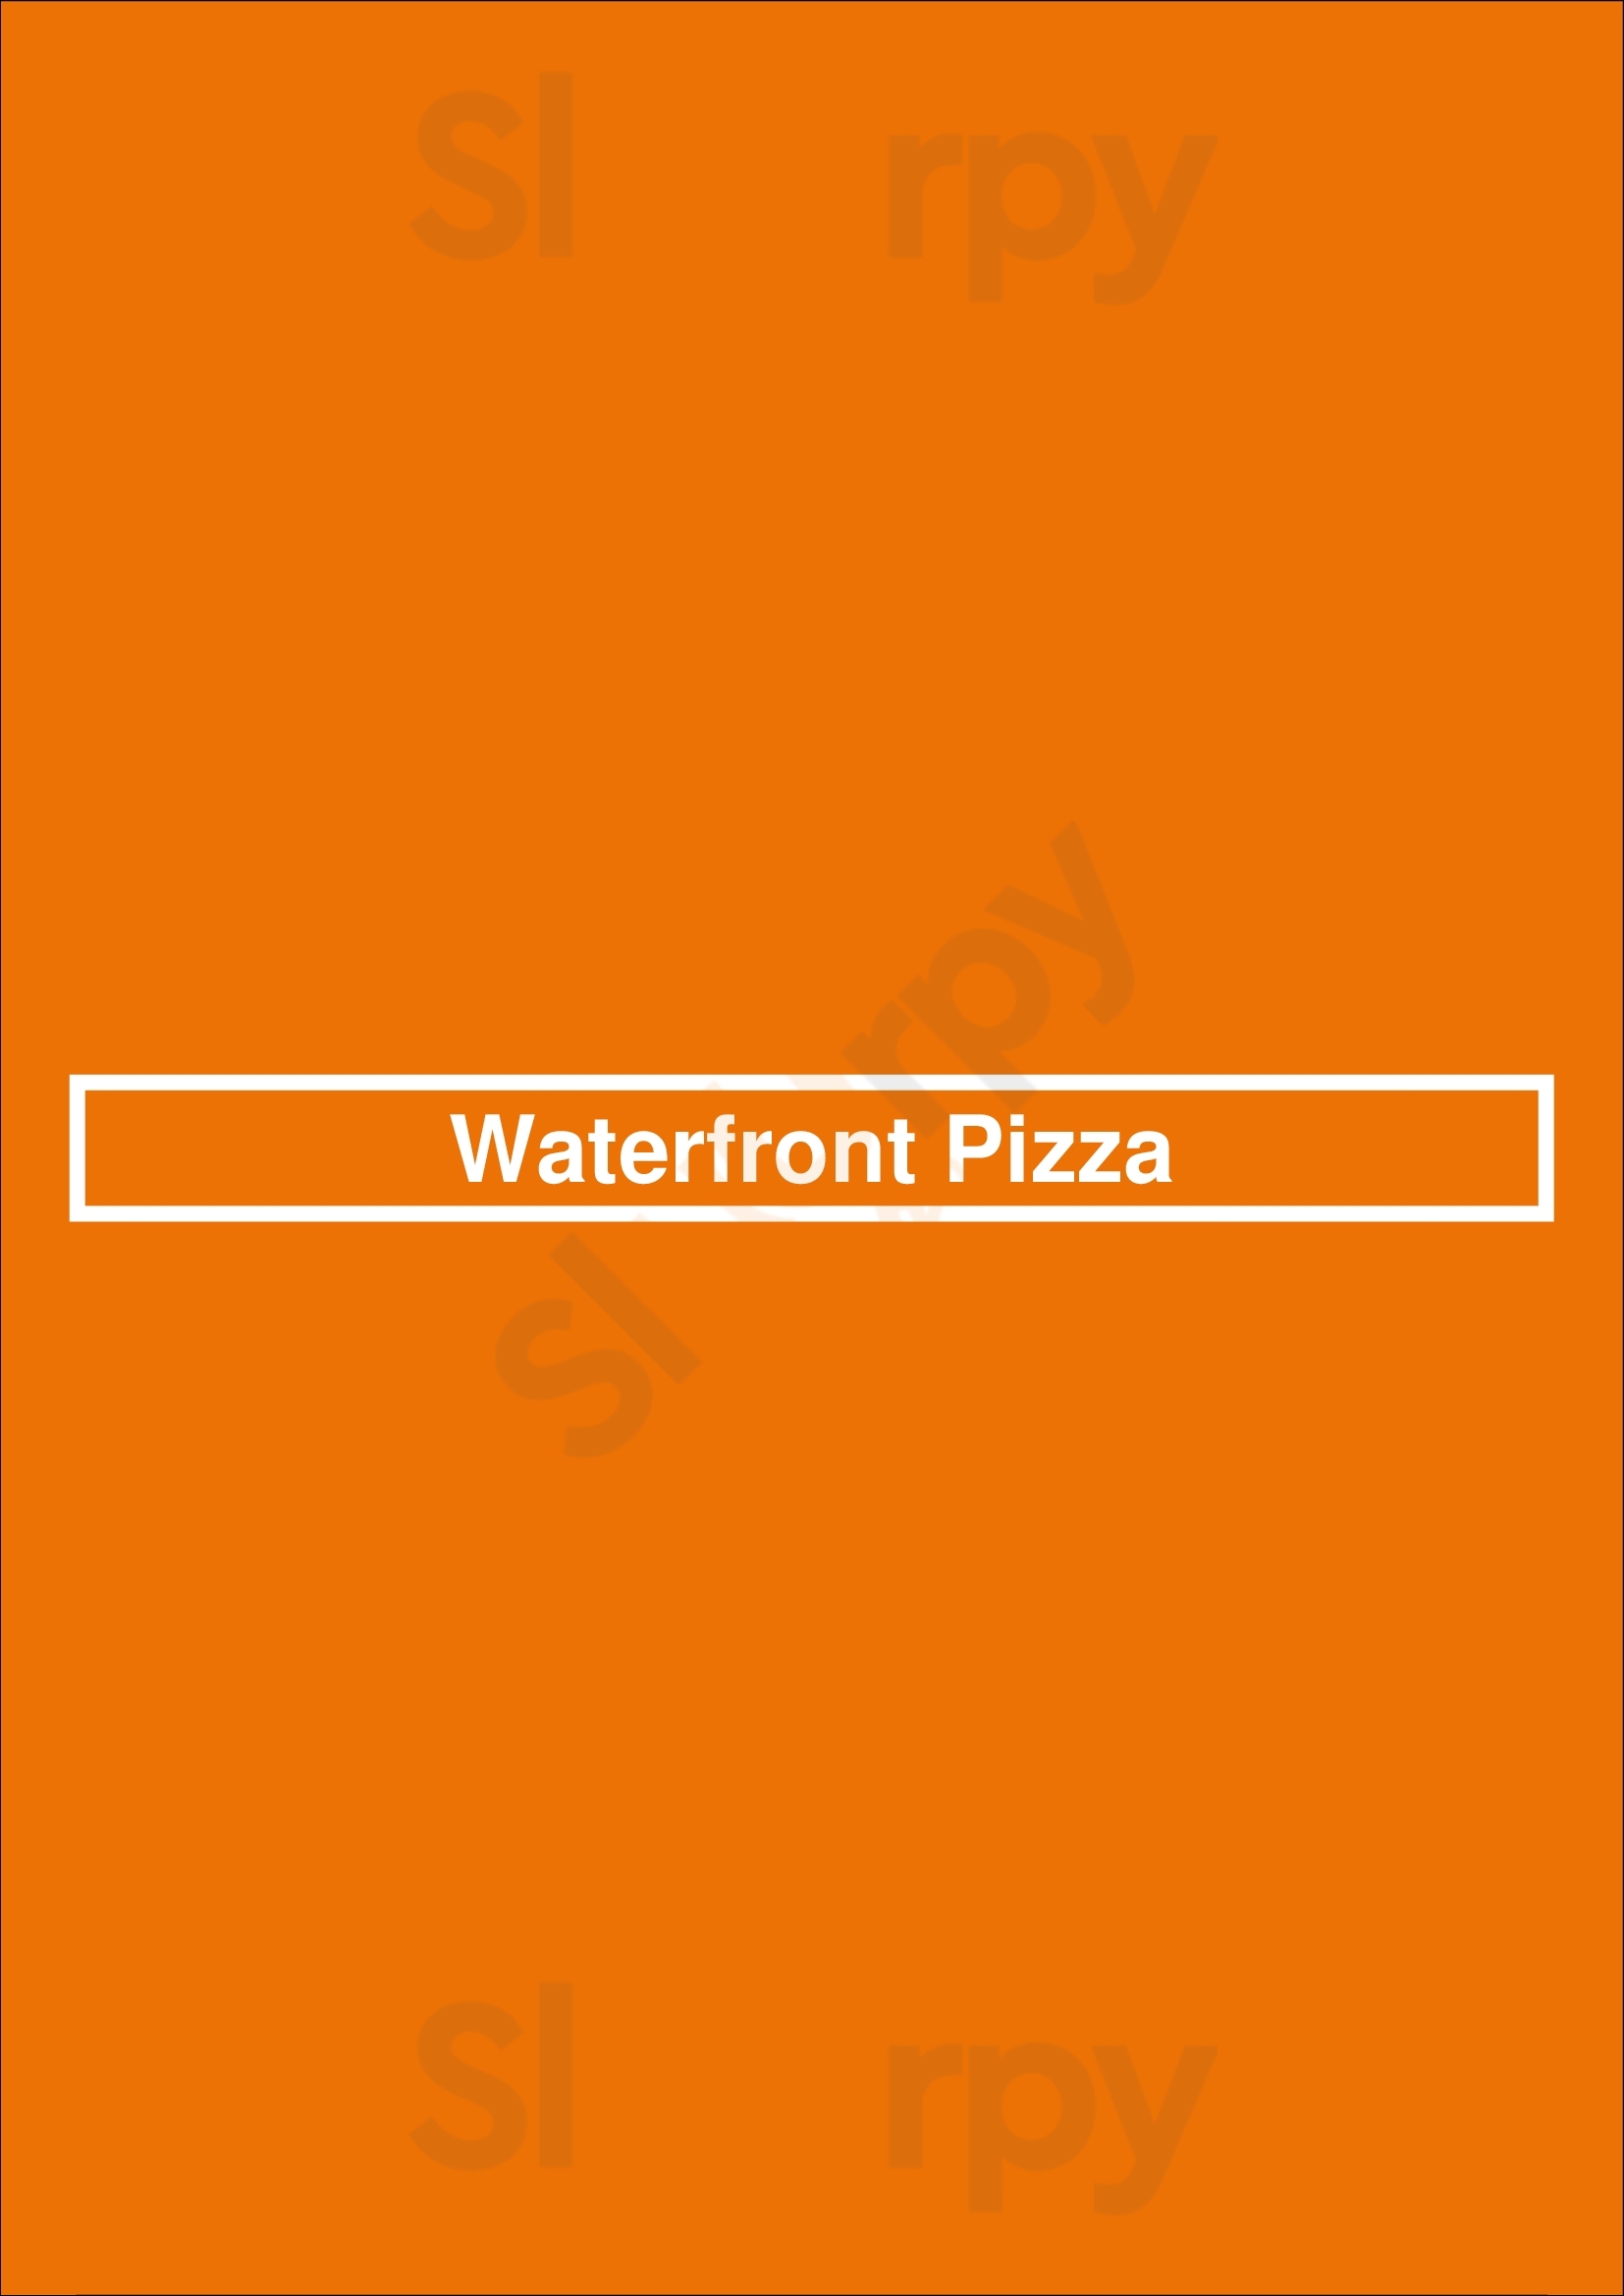 Waterfront Pizza Foster City Menu - 1